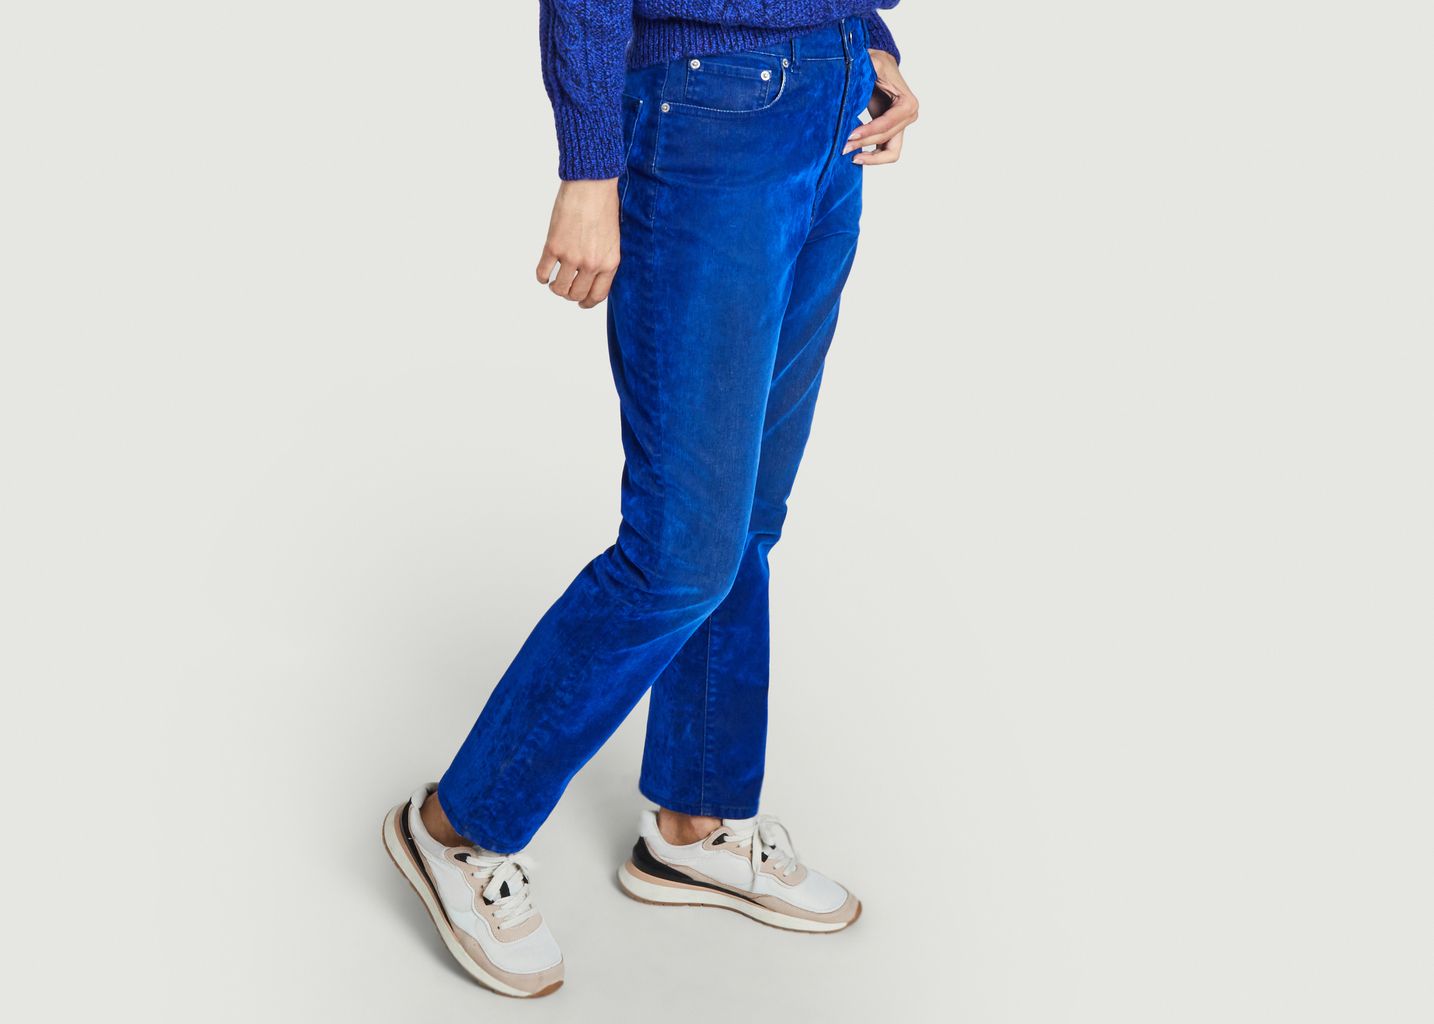 Pamy jeans - Bellerose